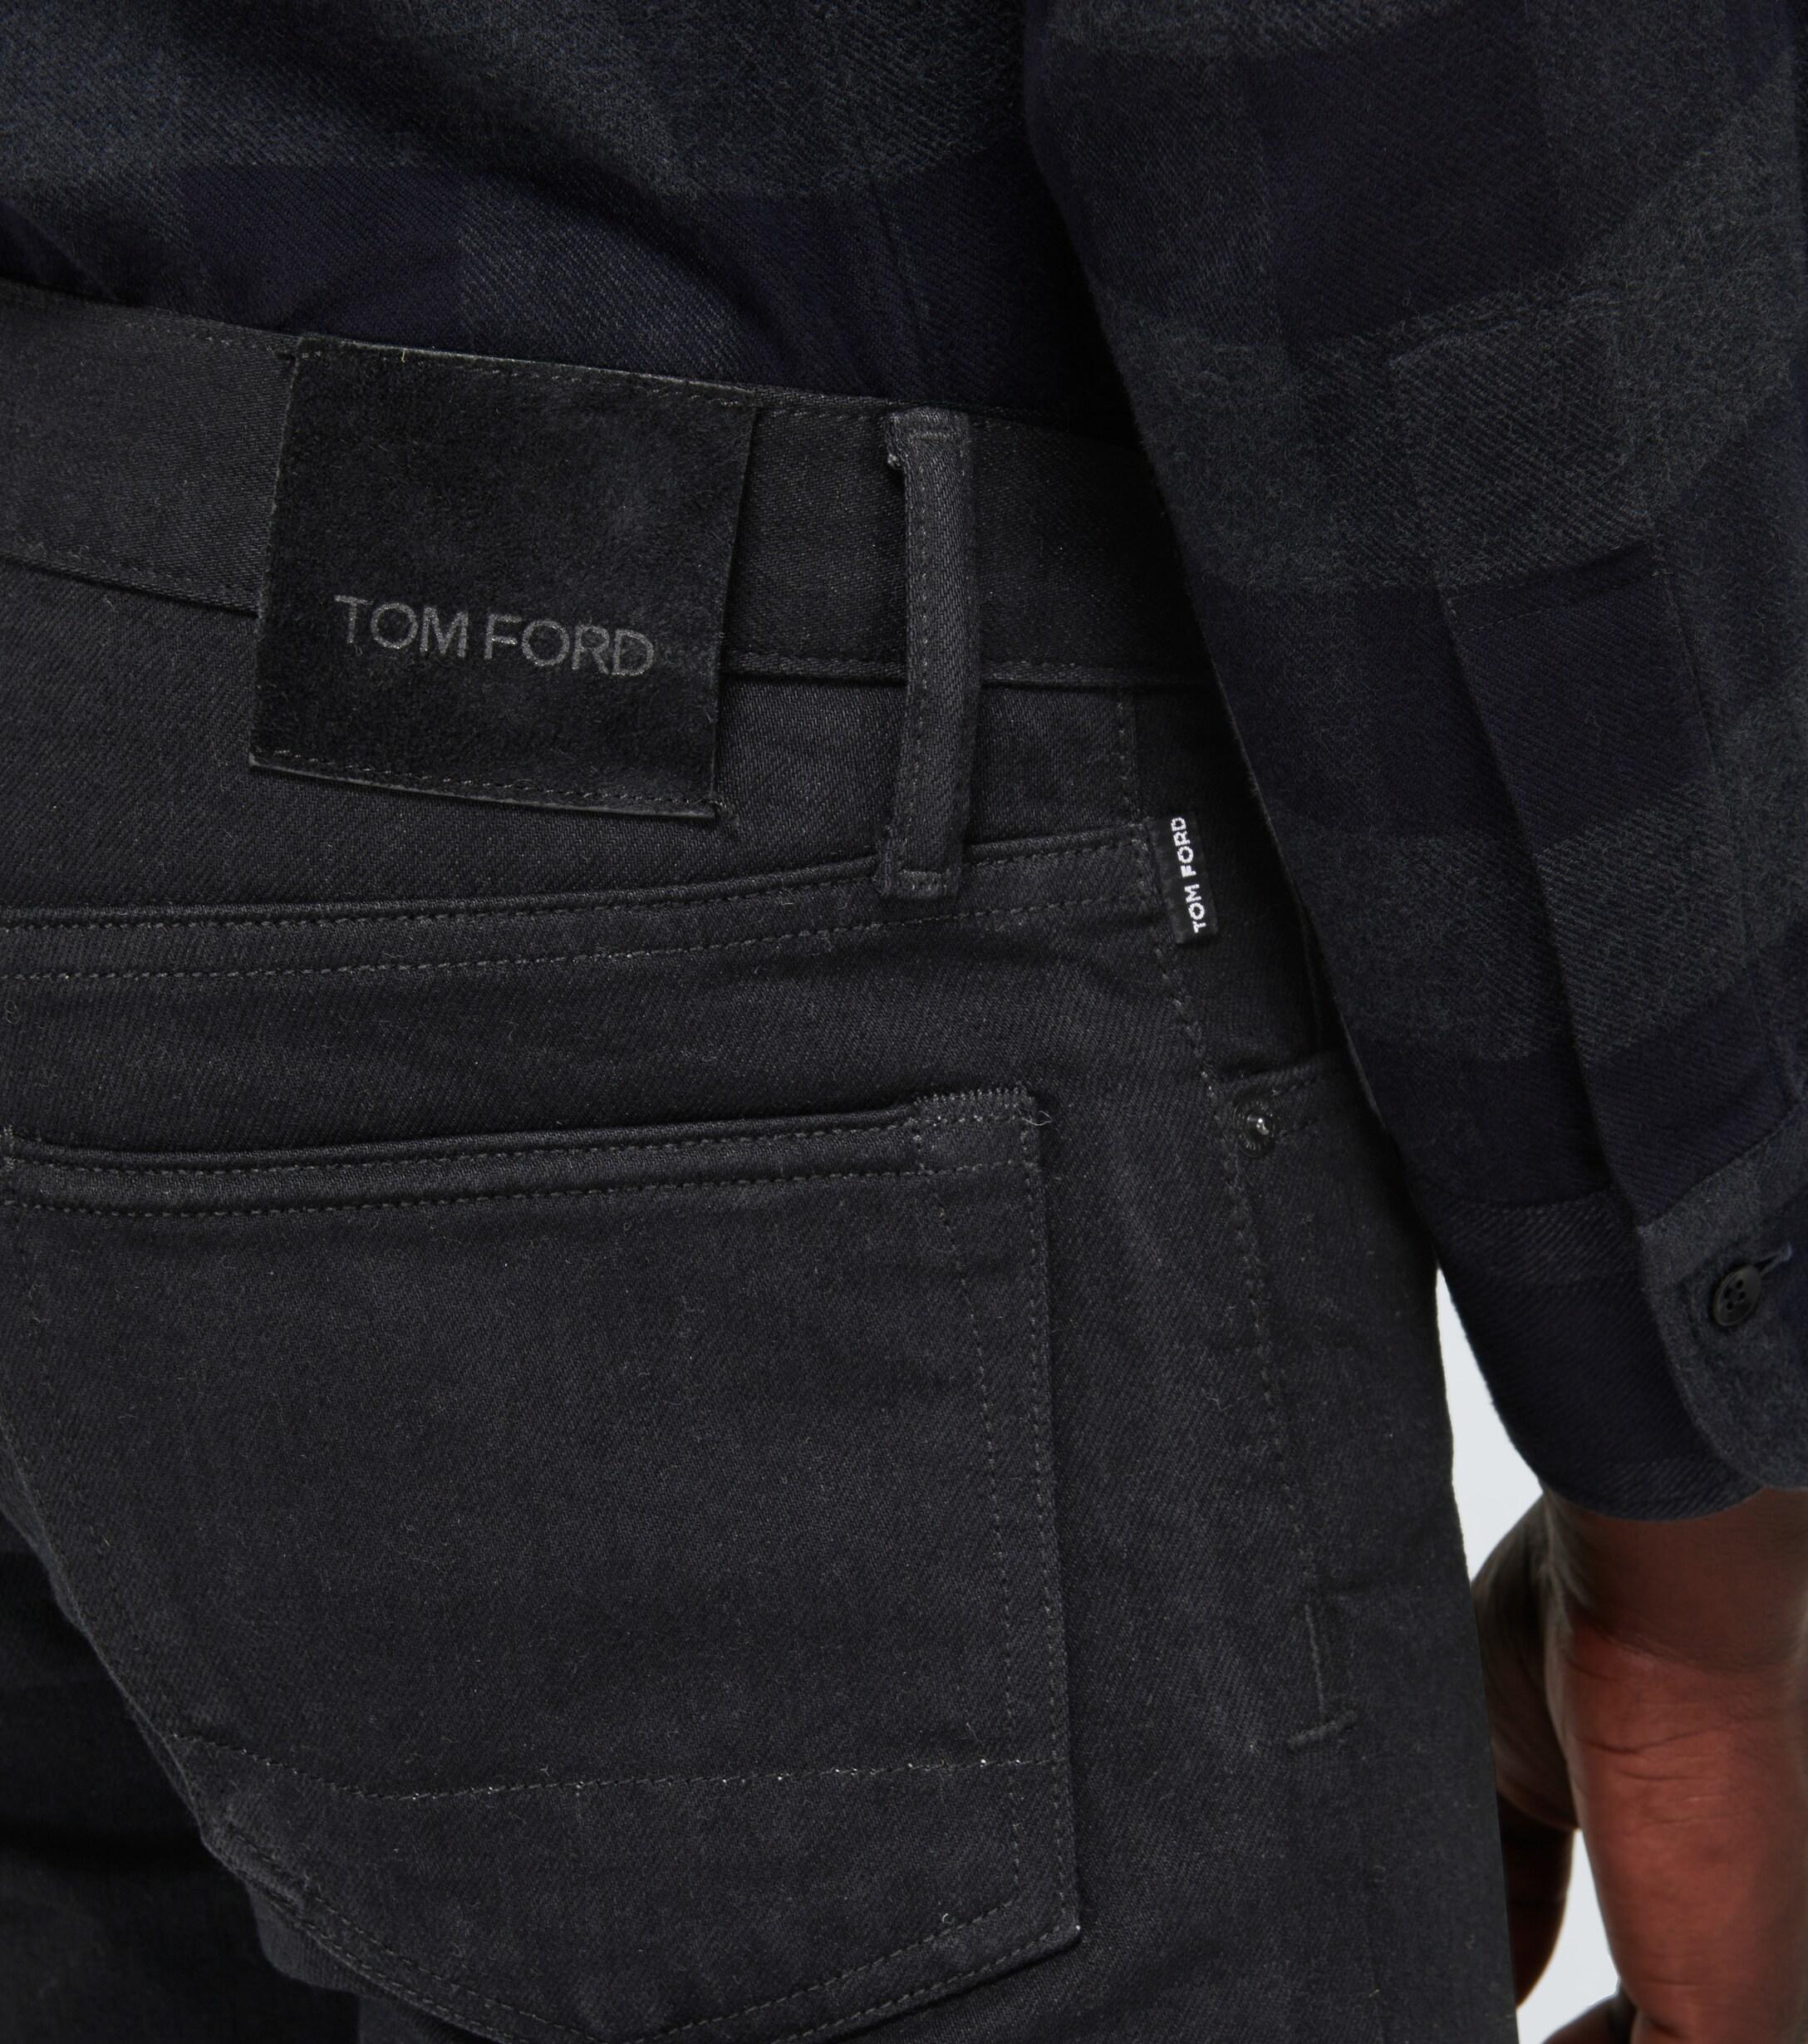 Tom Ford Denim Slim-fit Jeans in Black for Men - Lyst